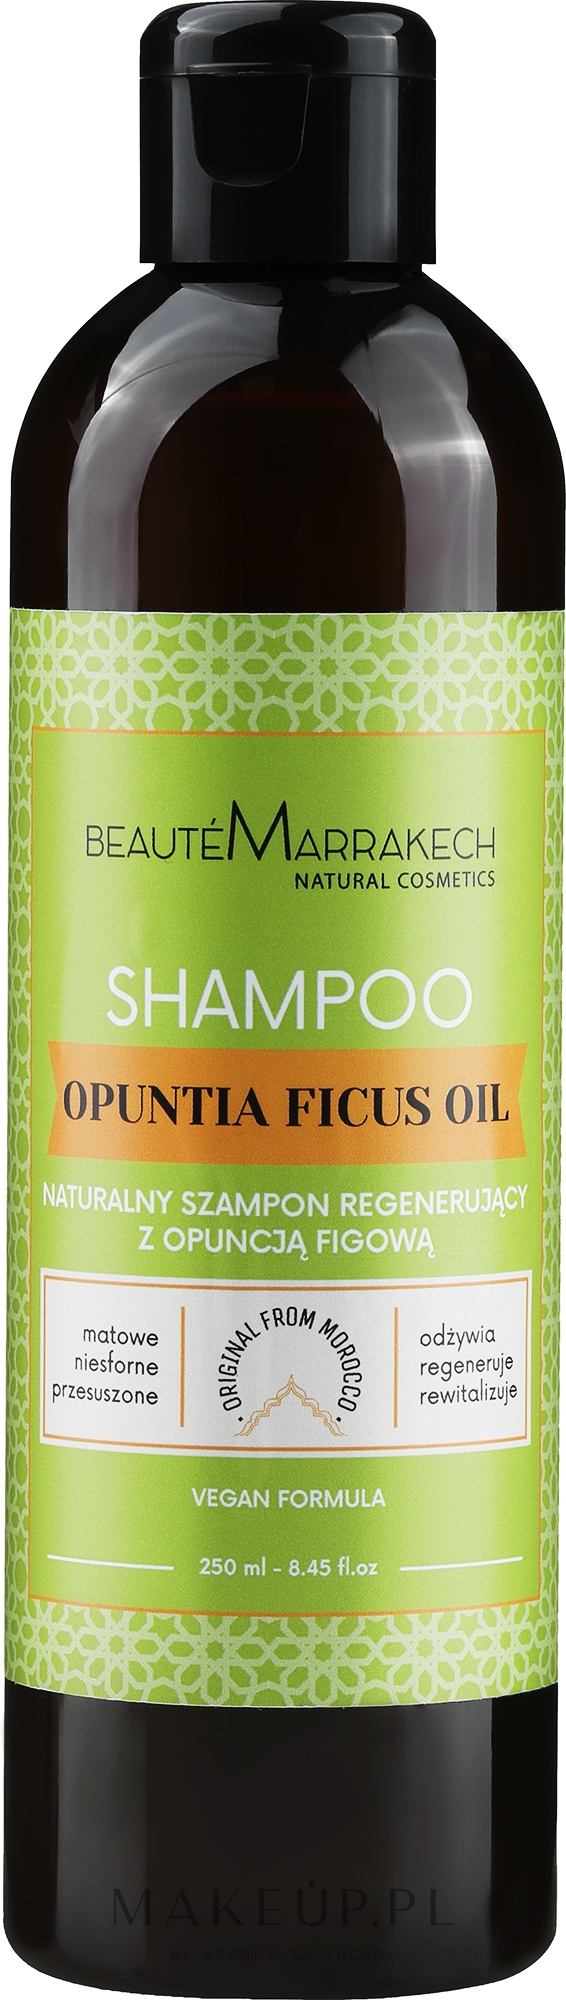 beaute marrakech szampon z opuncją